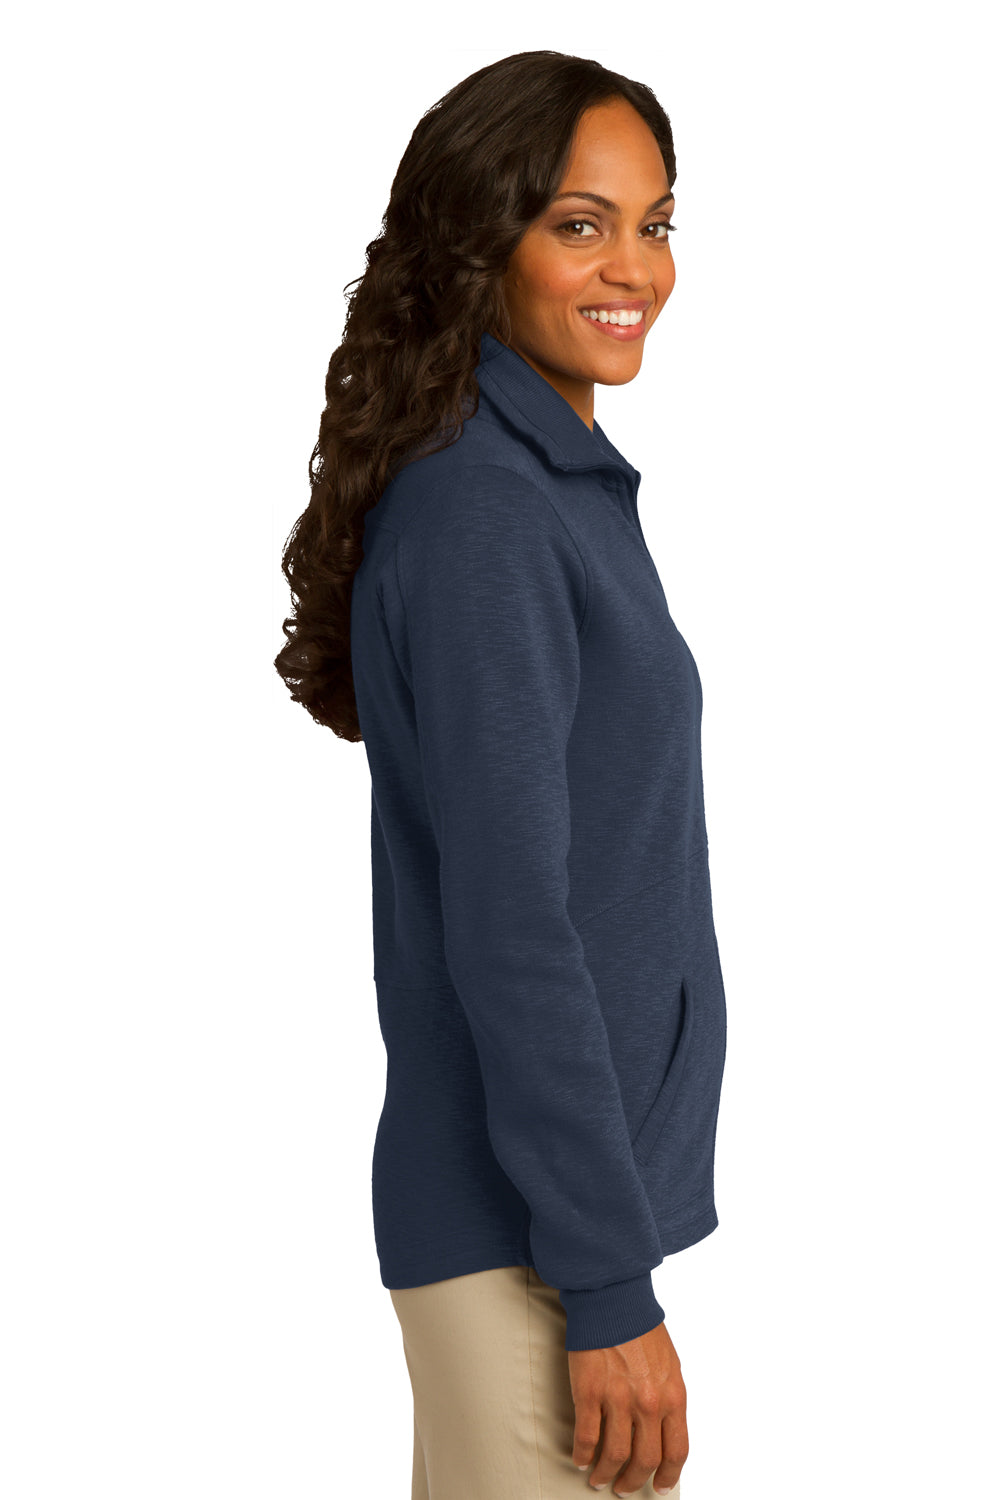 Port Authority L293 Womens Full Zip Fleece Jacket Navy Blue Side